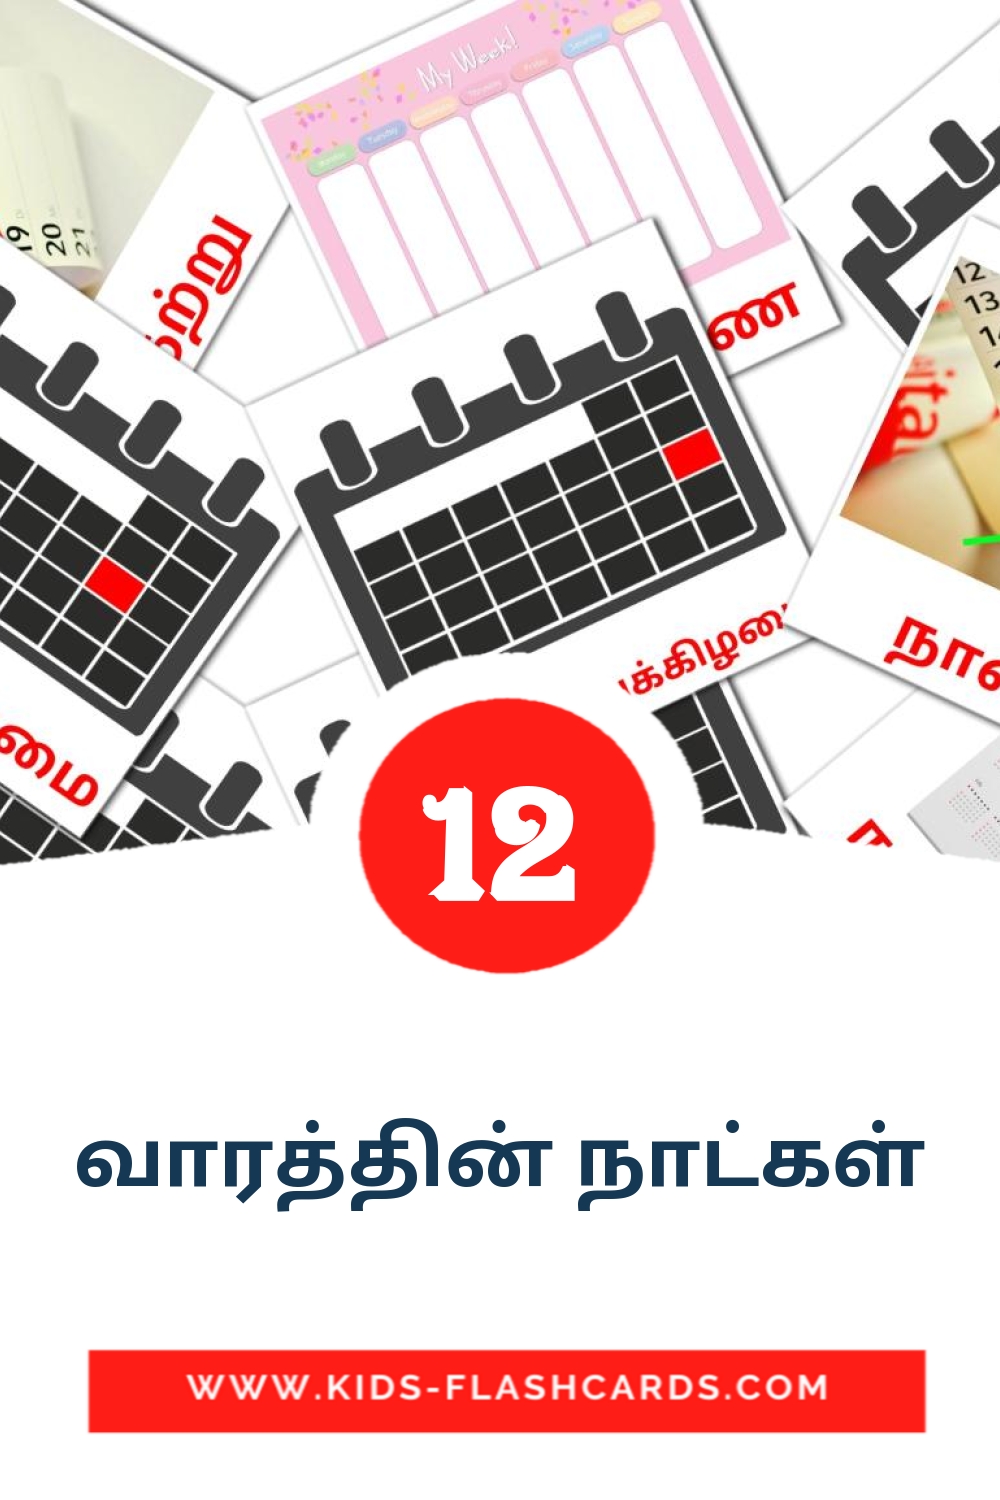 12 carte illustrate di வாரத்தின் நாட்கள் per la scuola materna in tamil